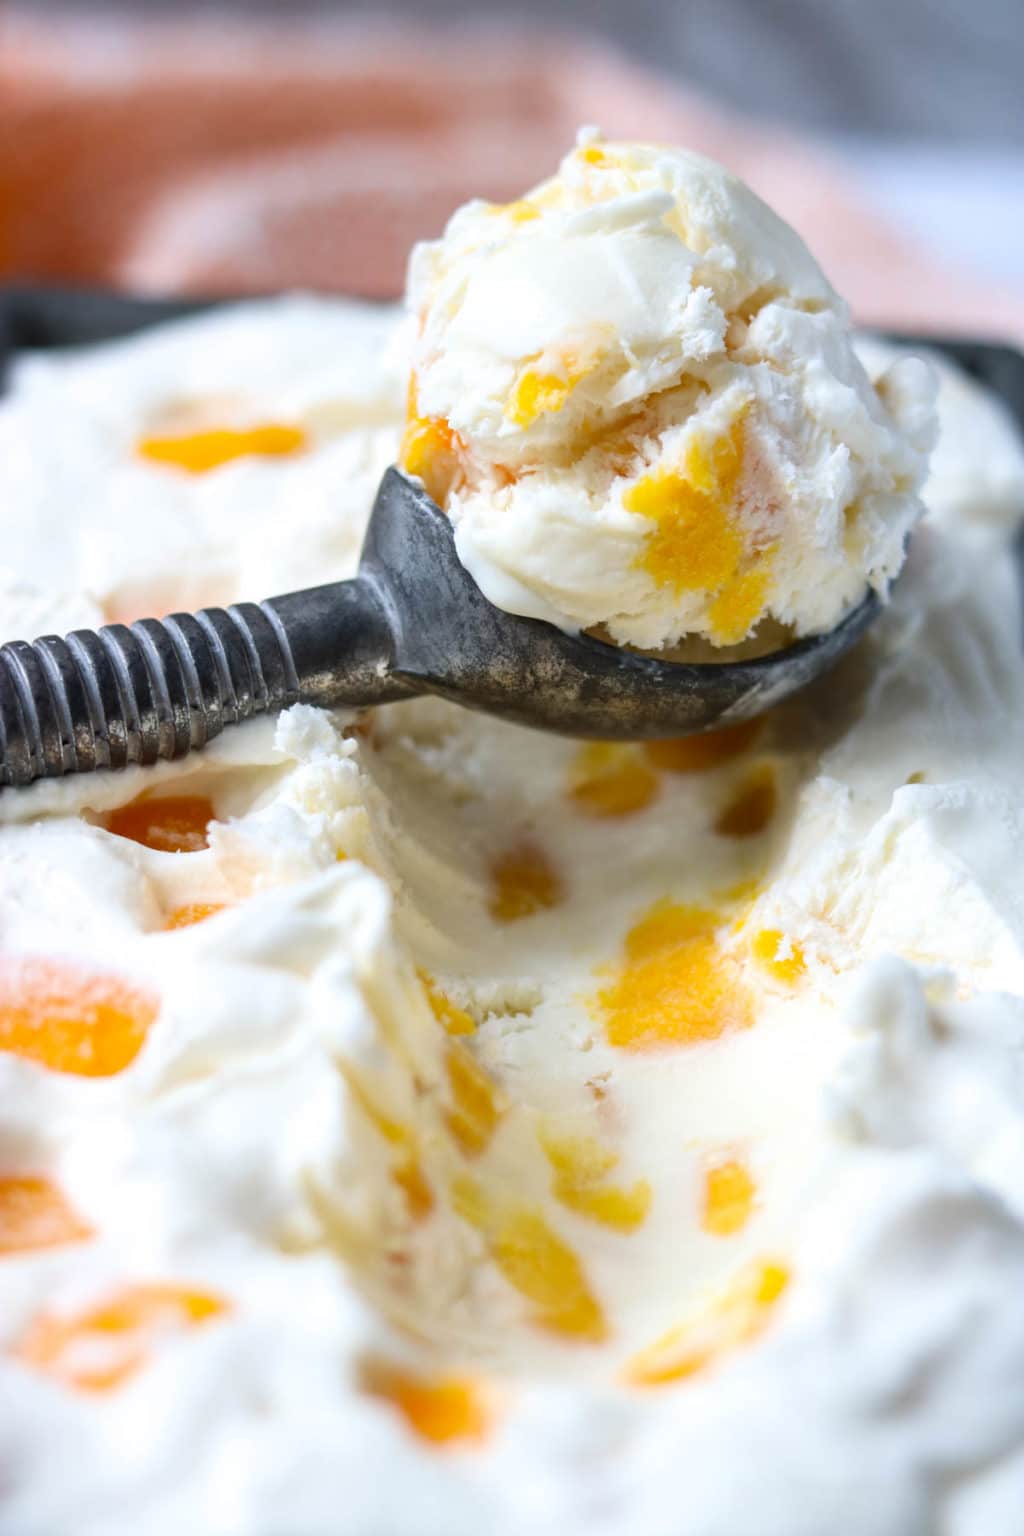 an ice cream scoop full of mango ice cream